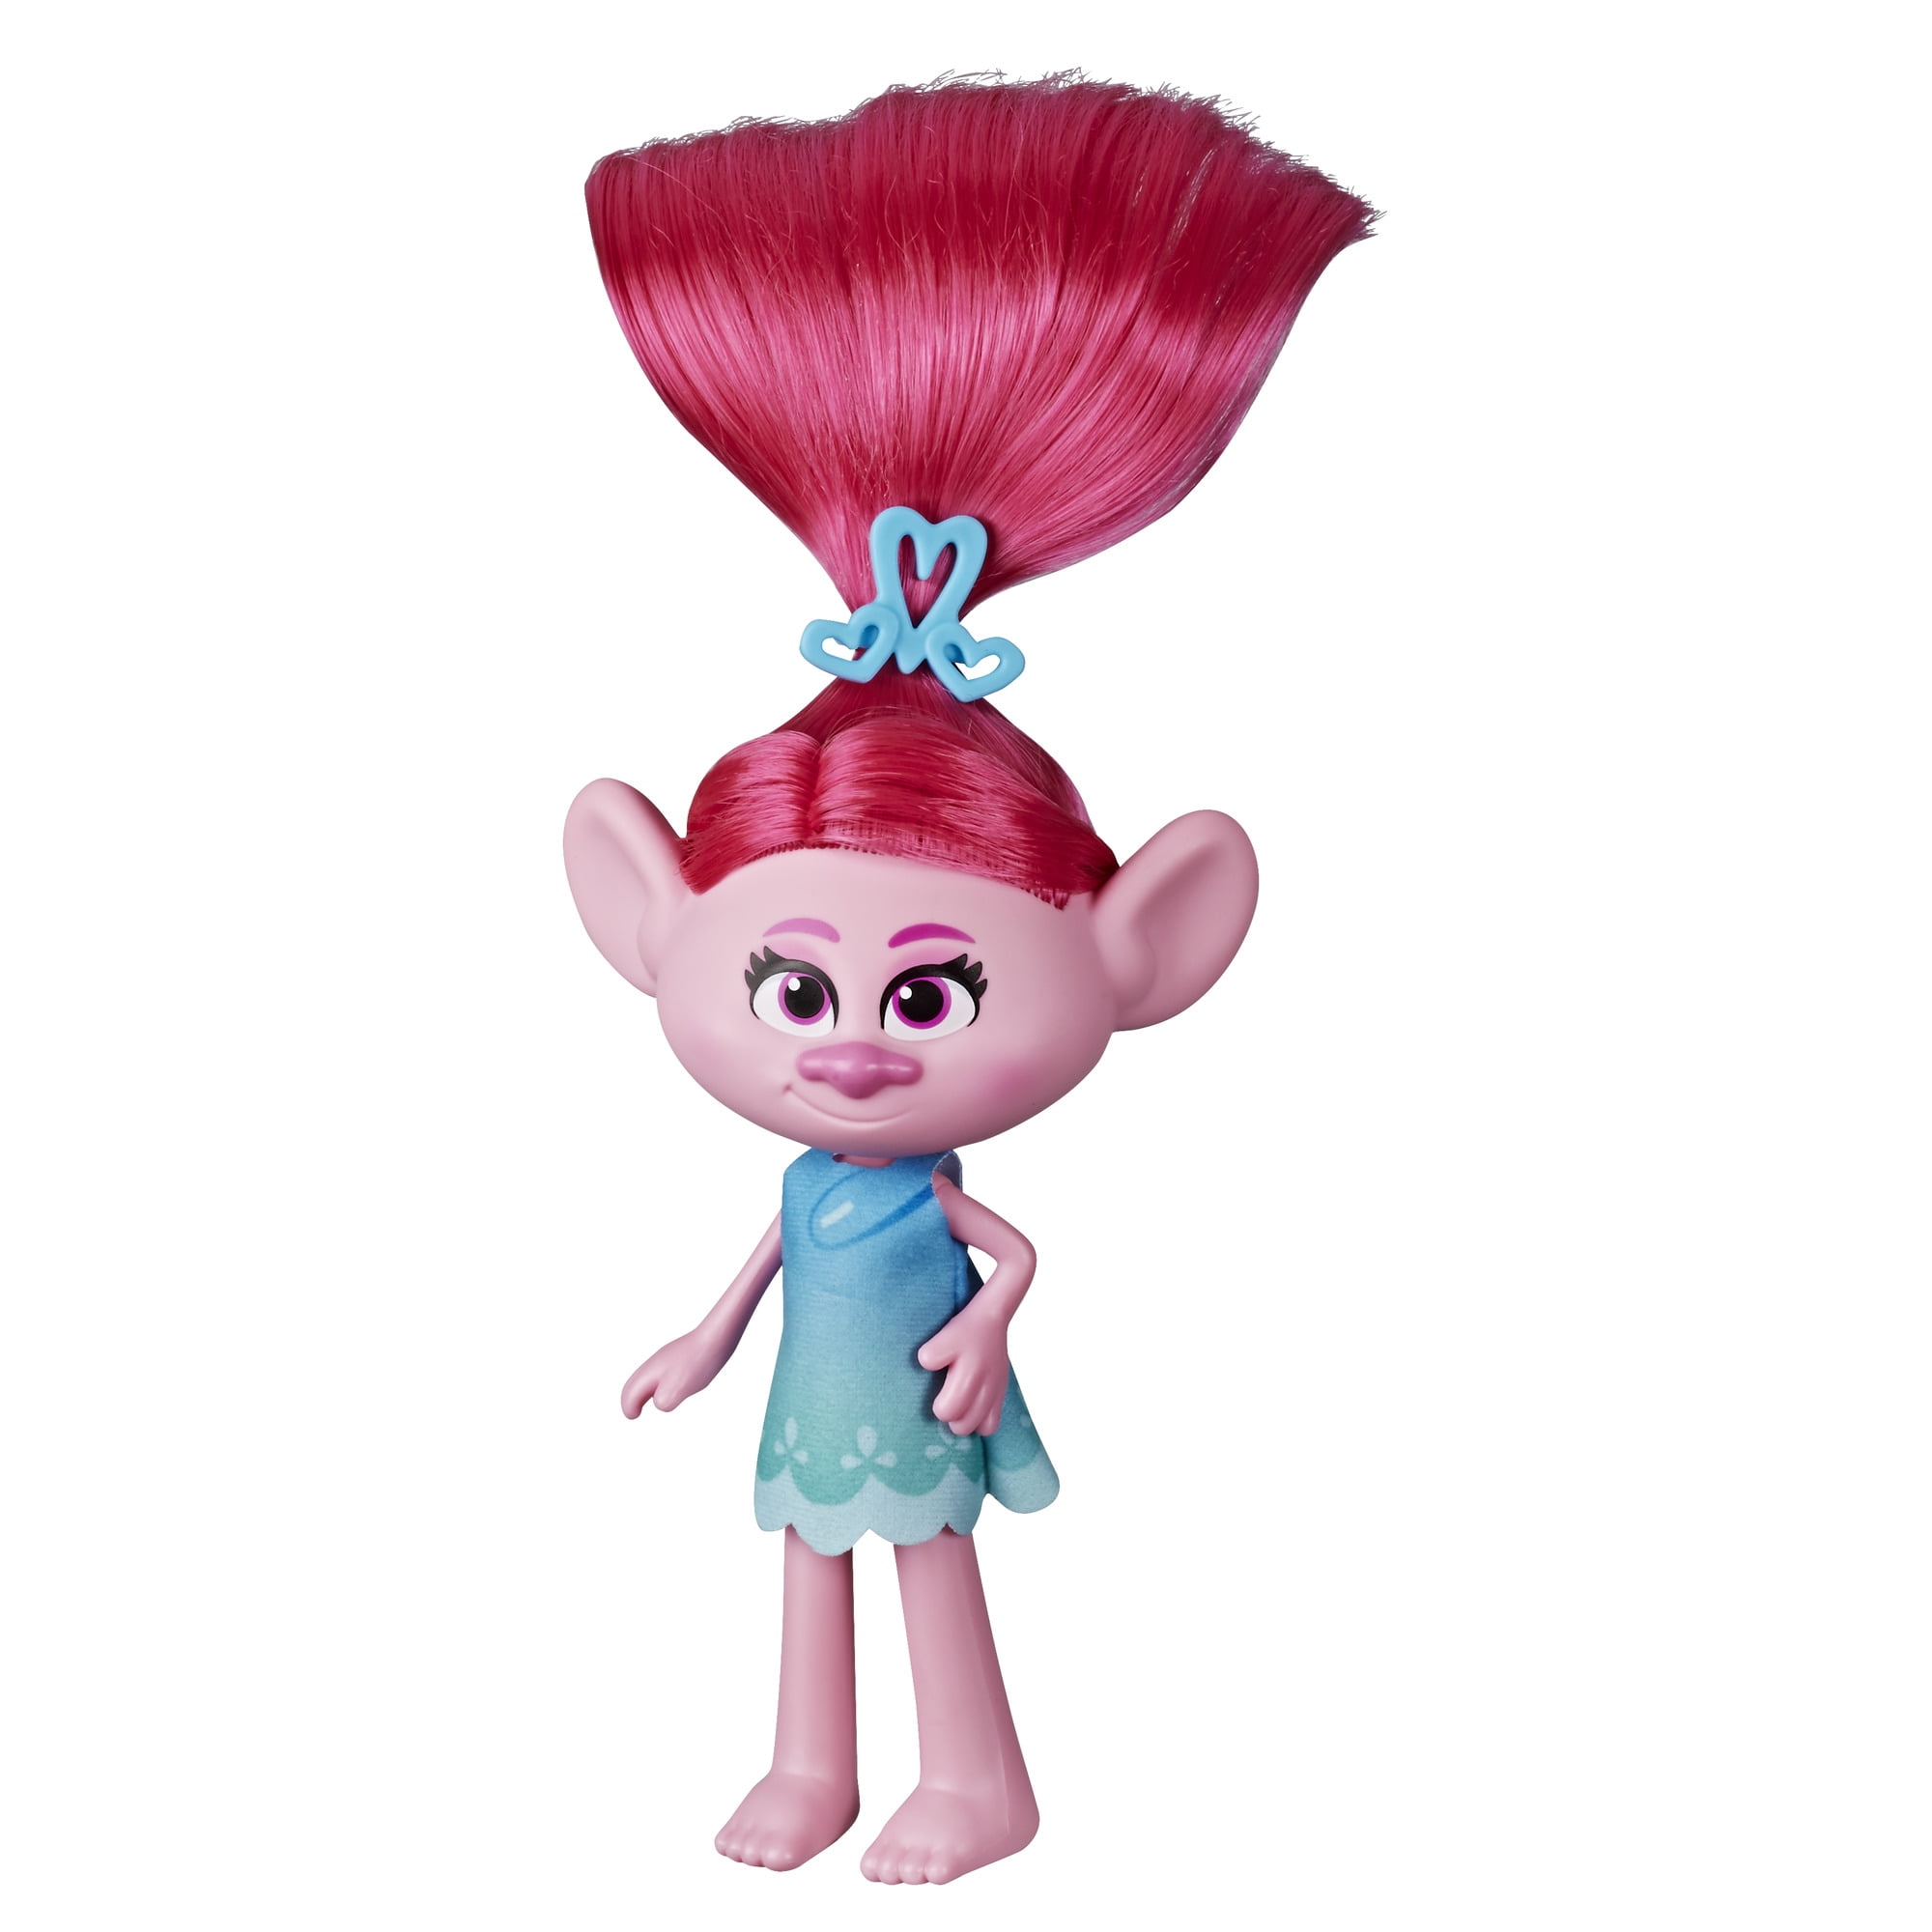 Poppy Pink Troll Plush 14" Dreamworks Trolls Movie Doll Stuffed Toy 2019 Cute for sale online 